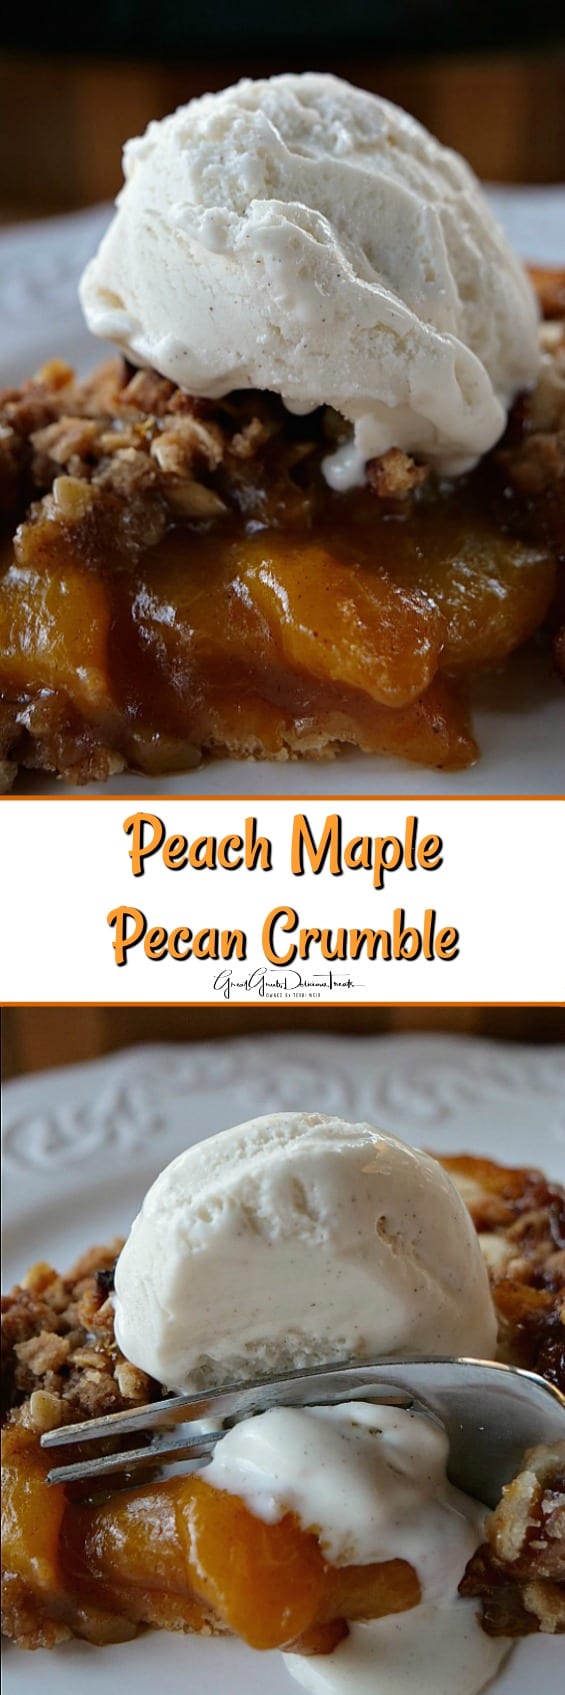 Peach Maple Pecan Crumble